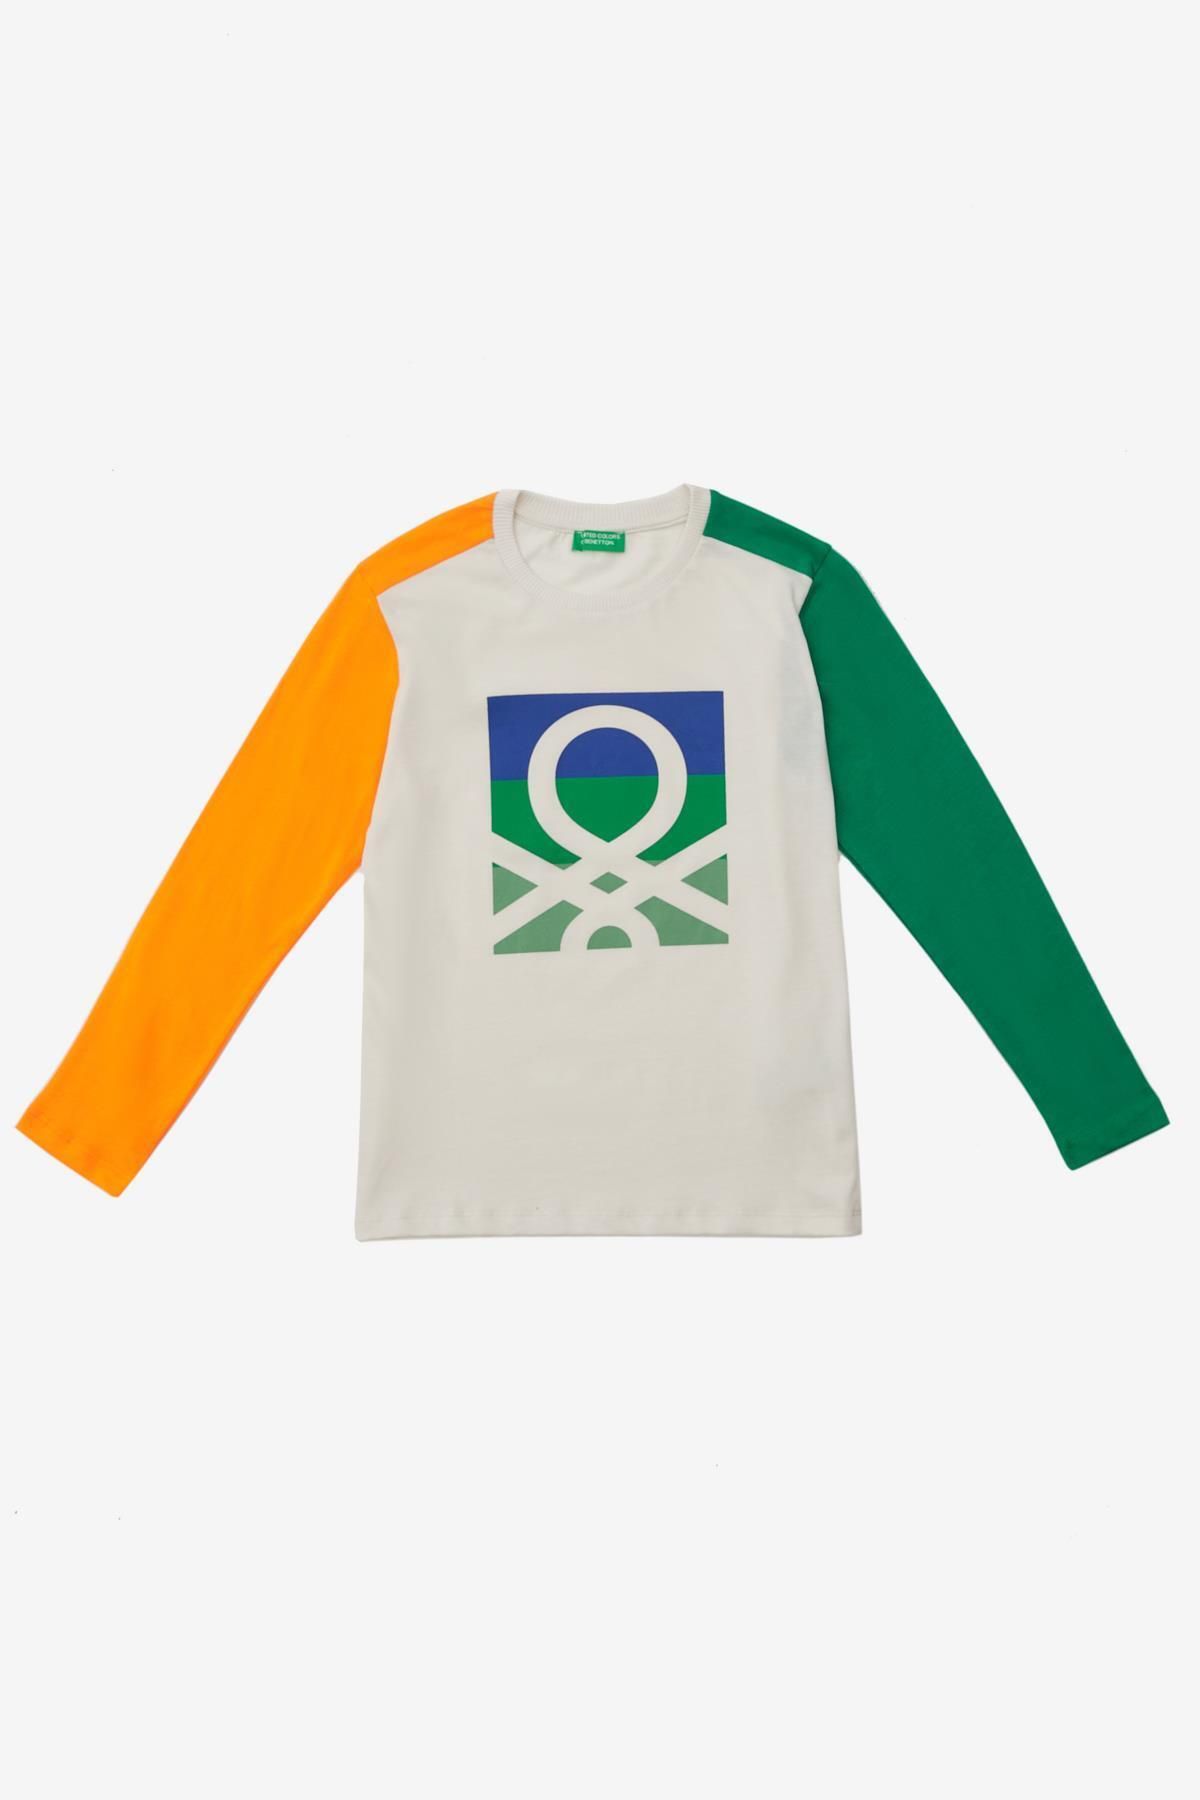 United Colors of Benetton Erkek Çocuk Sweatshirt